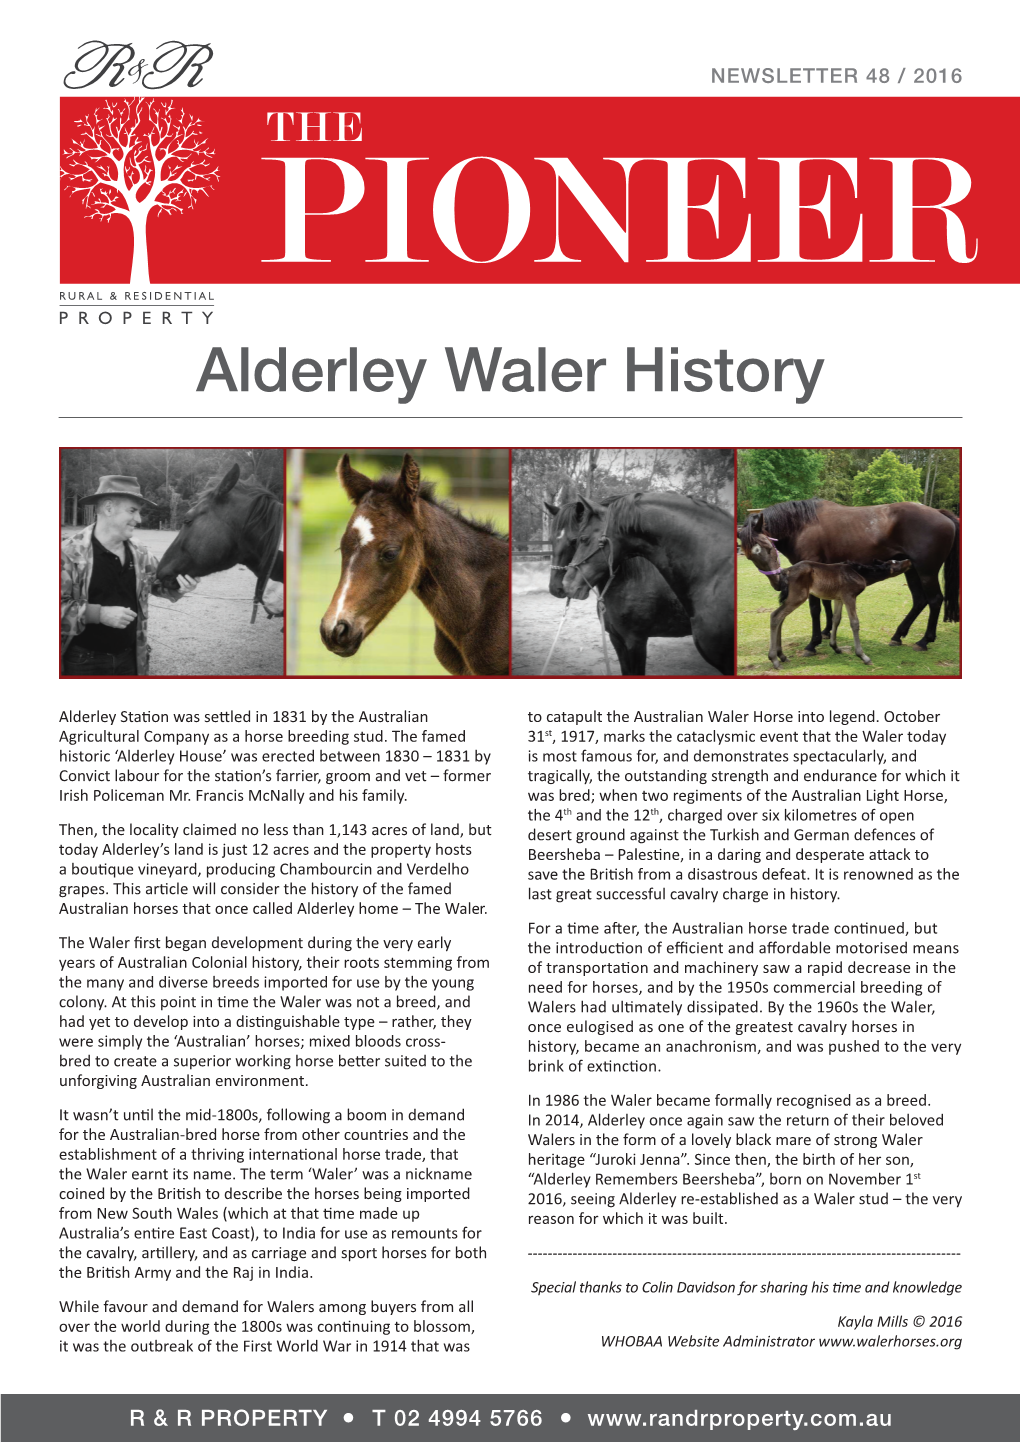 Alderley Waler History